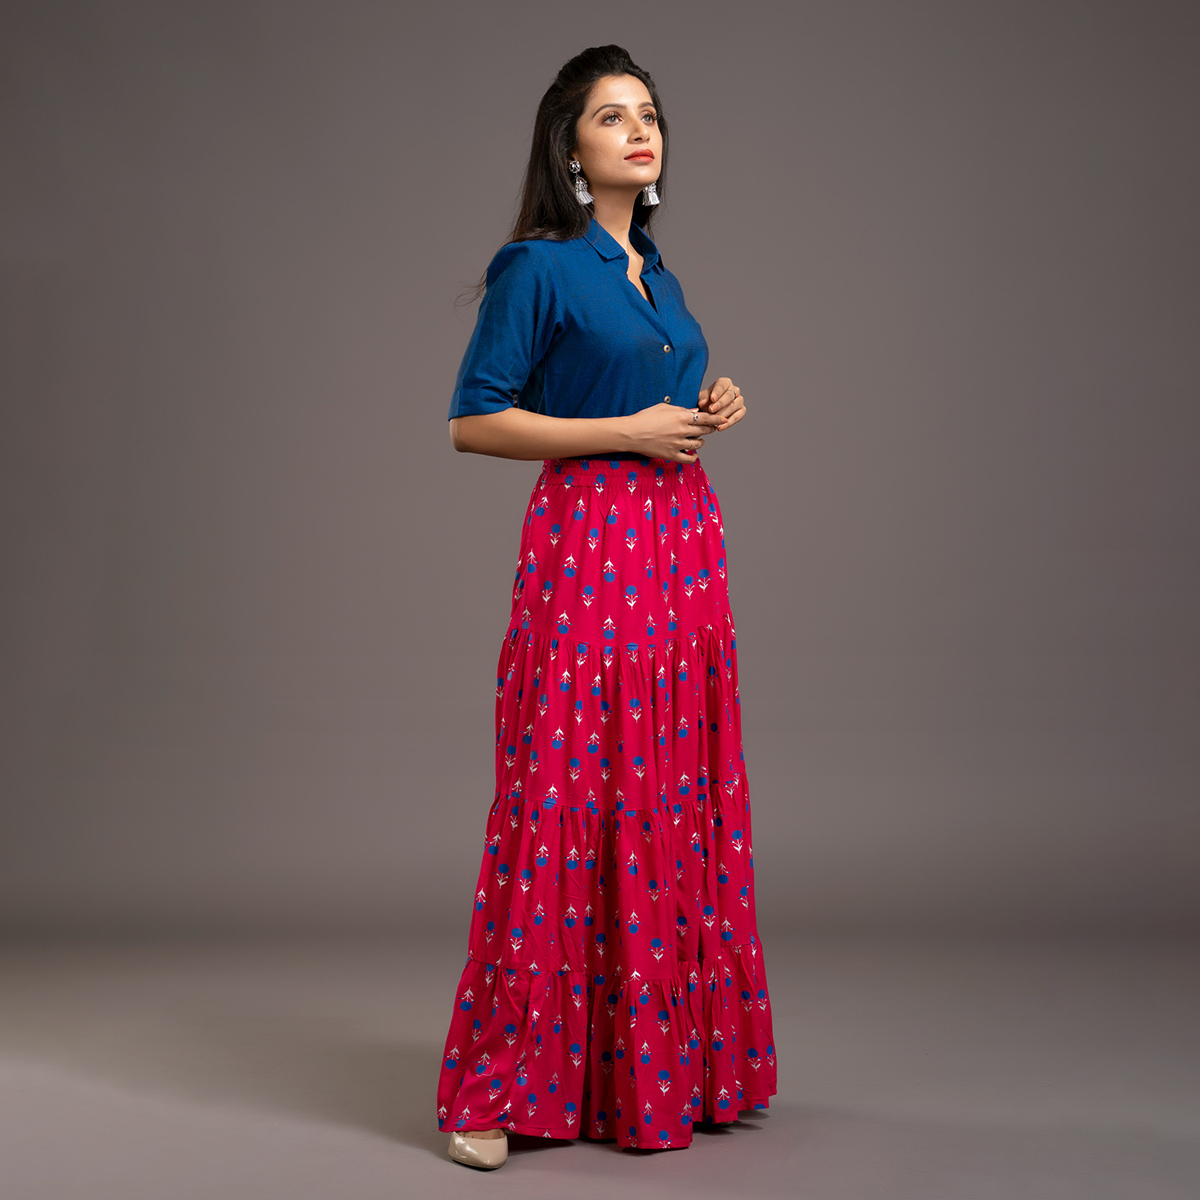 Zella Solid Color Cotton Silk Elbow Sleeve Shirt & Rayon Printed Tyre Skirt Set - Royal Blue & Majantha